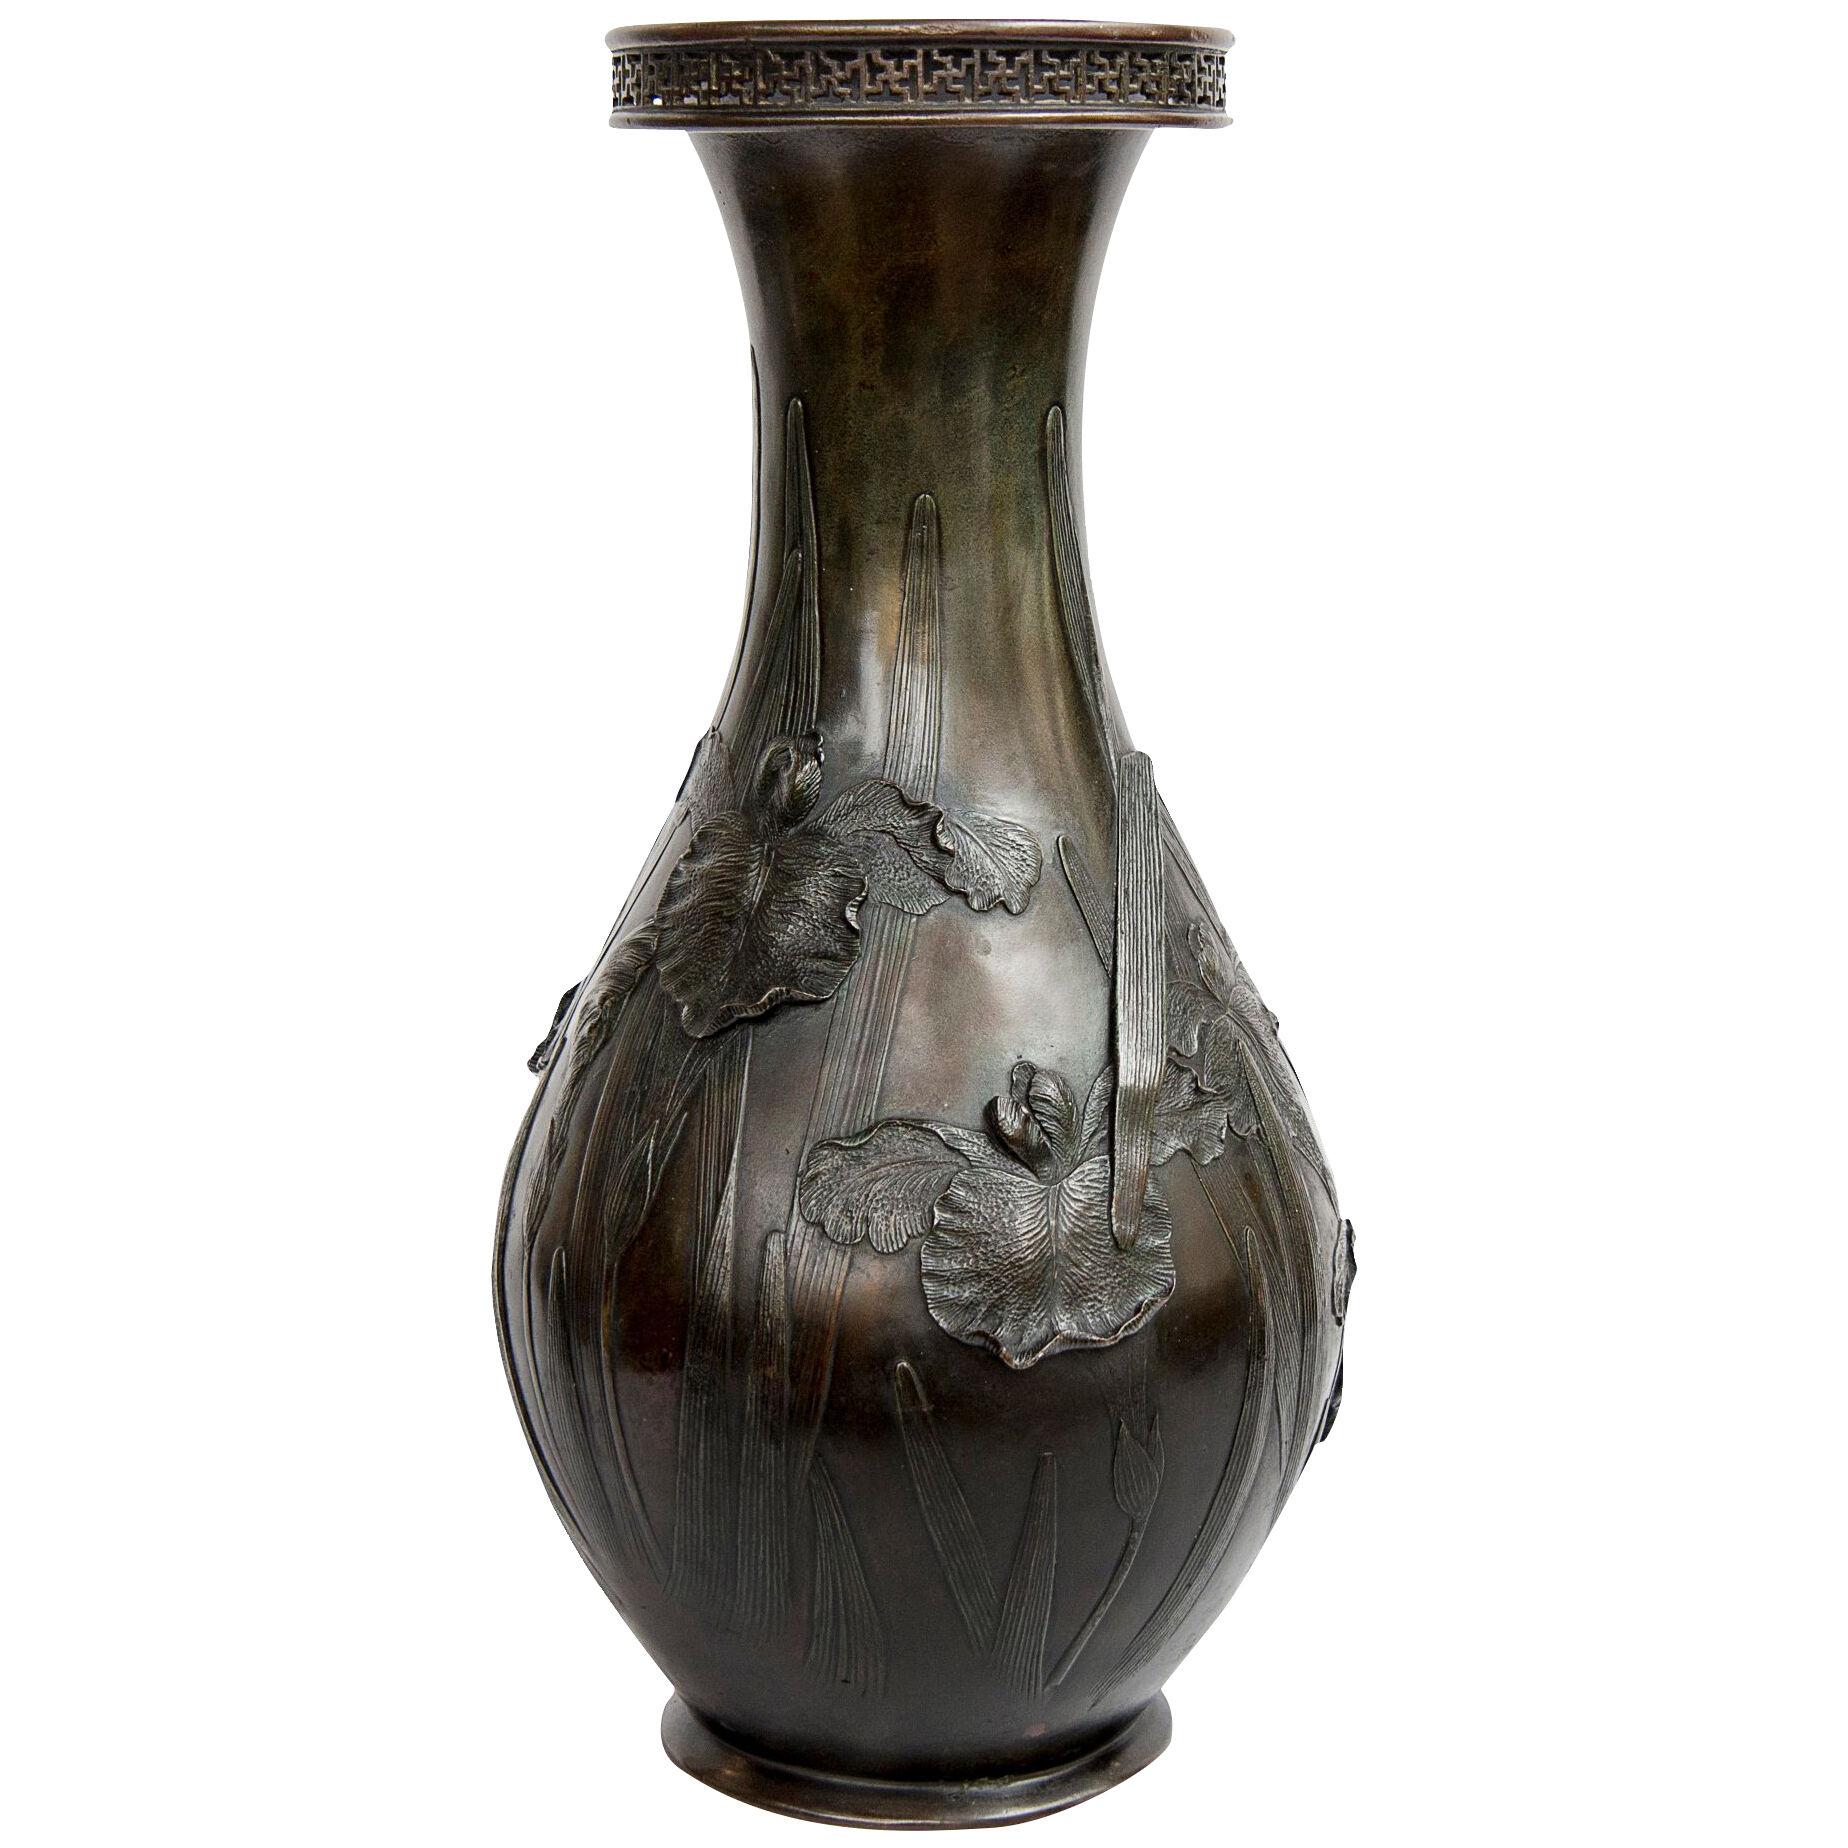 Japanese bronze vase with irises by Kakuha Kanzaemon IX